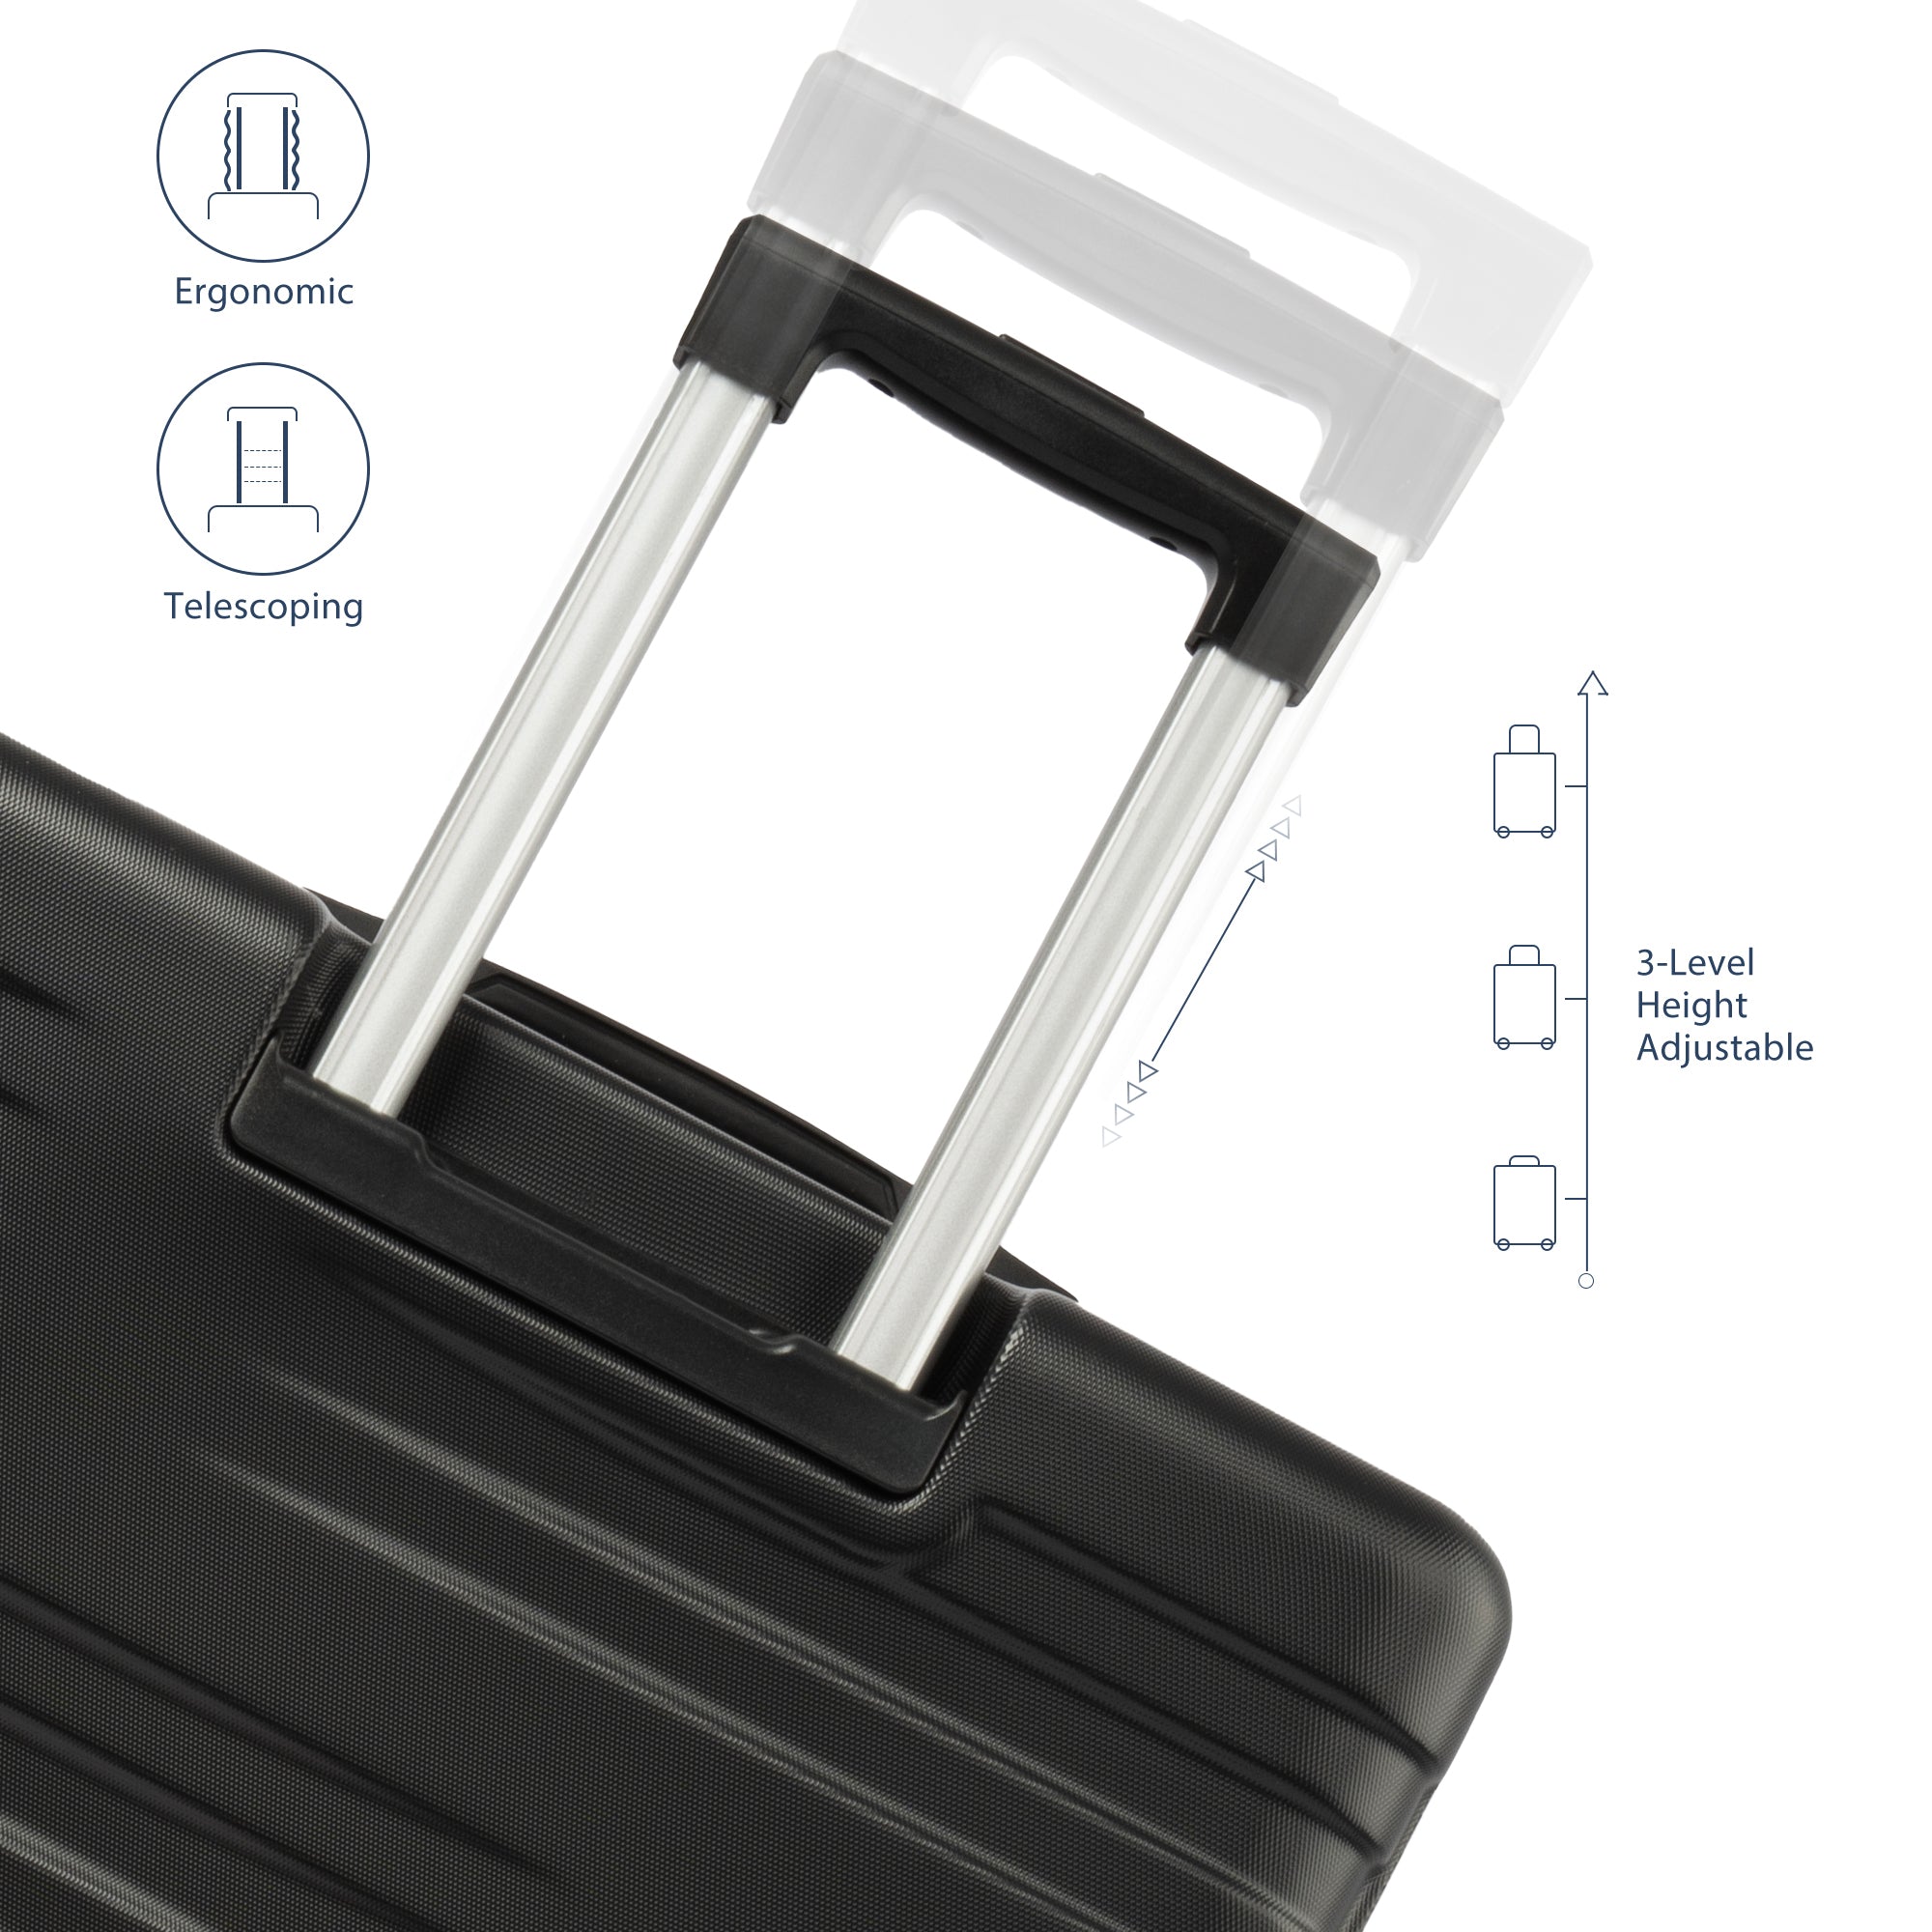 Merax Luggage with TSA Lock Spinner Wheels Hardside black-abs